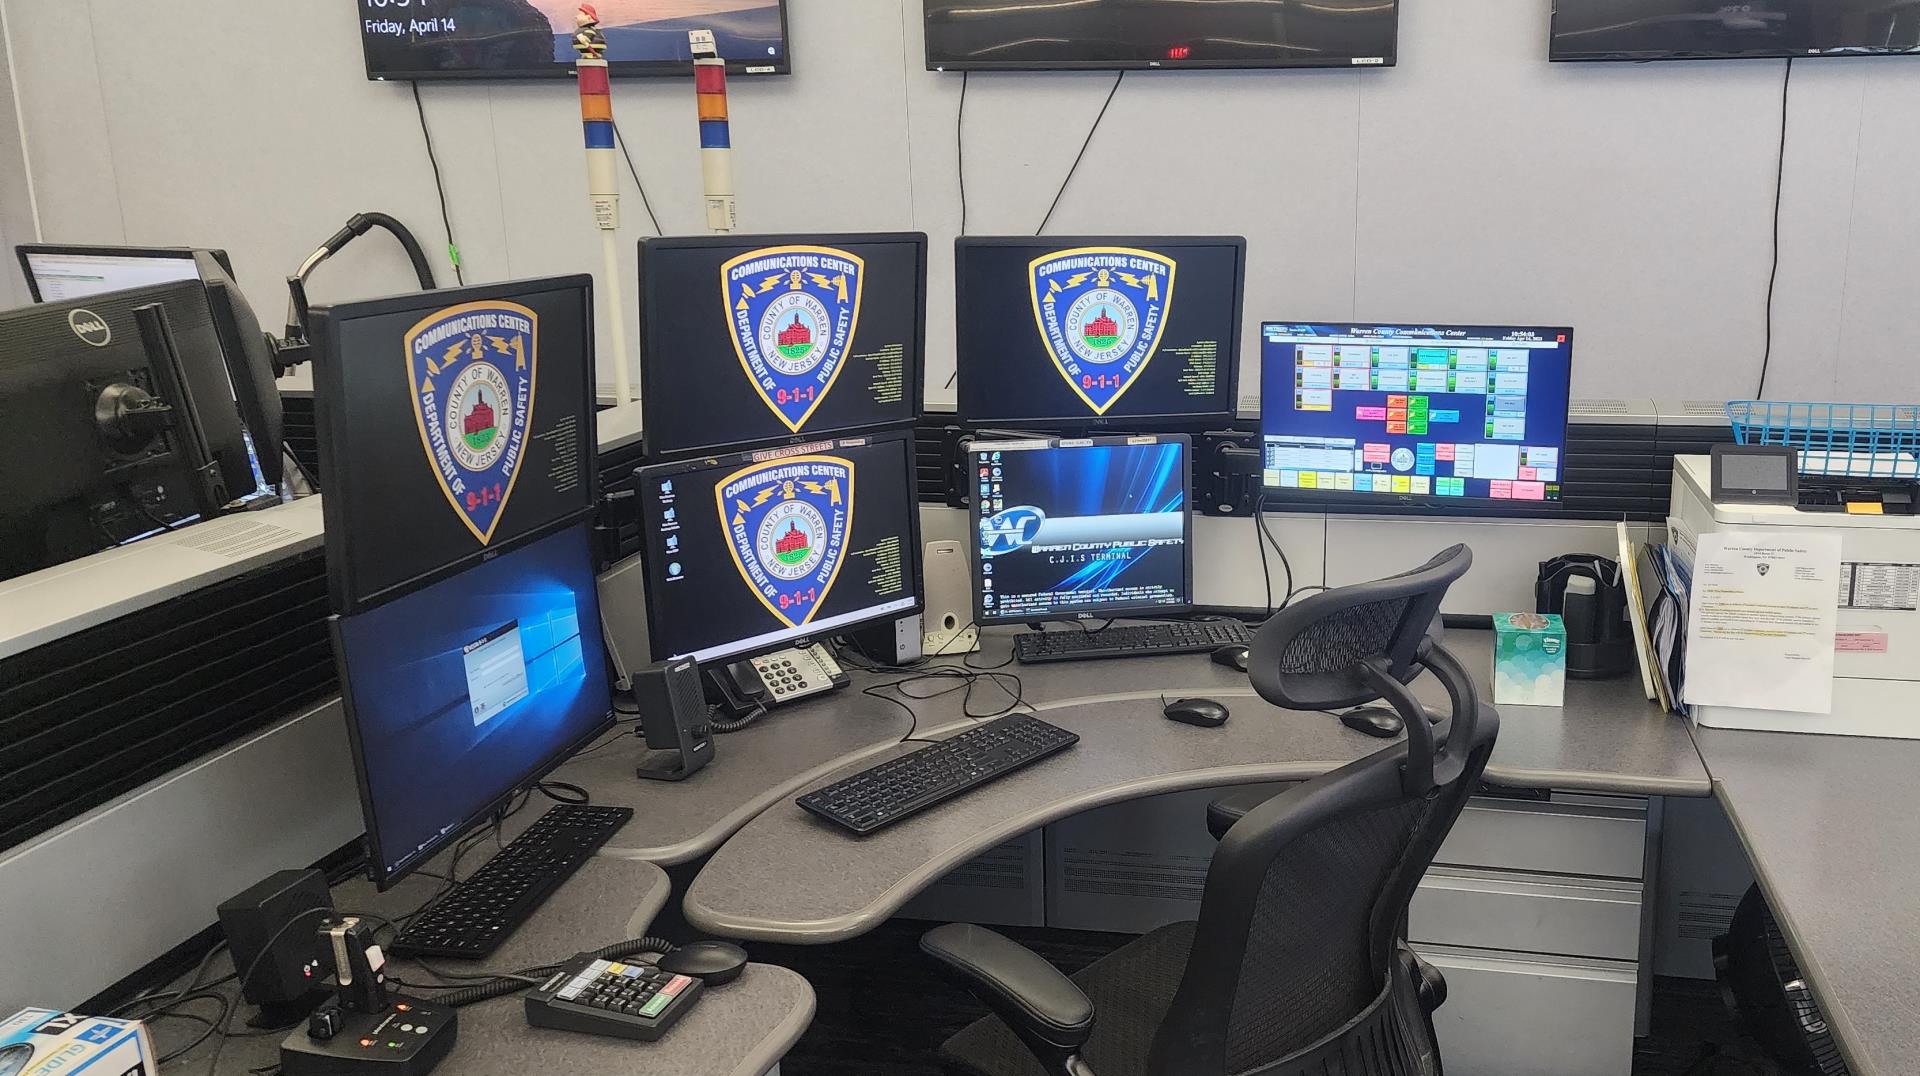 911 work station